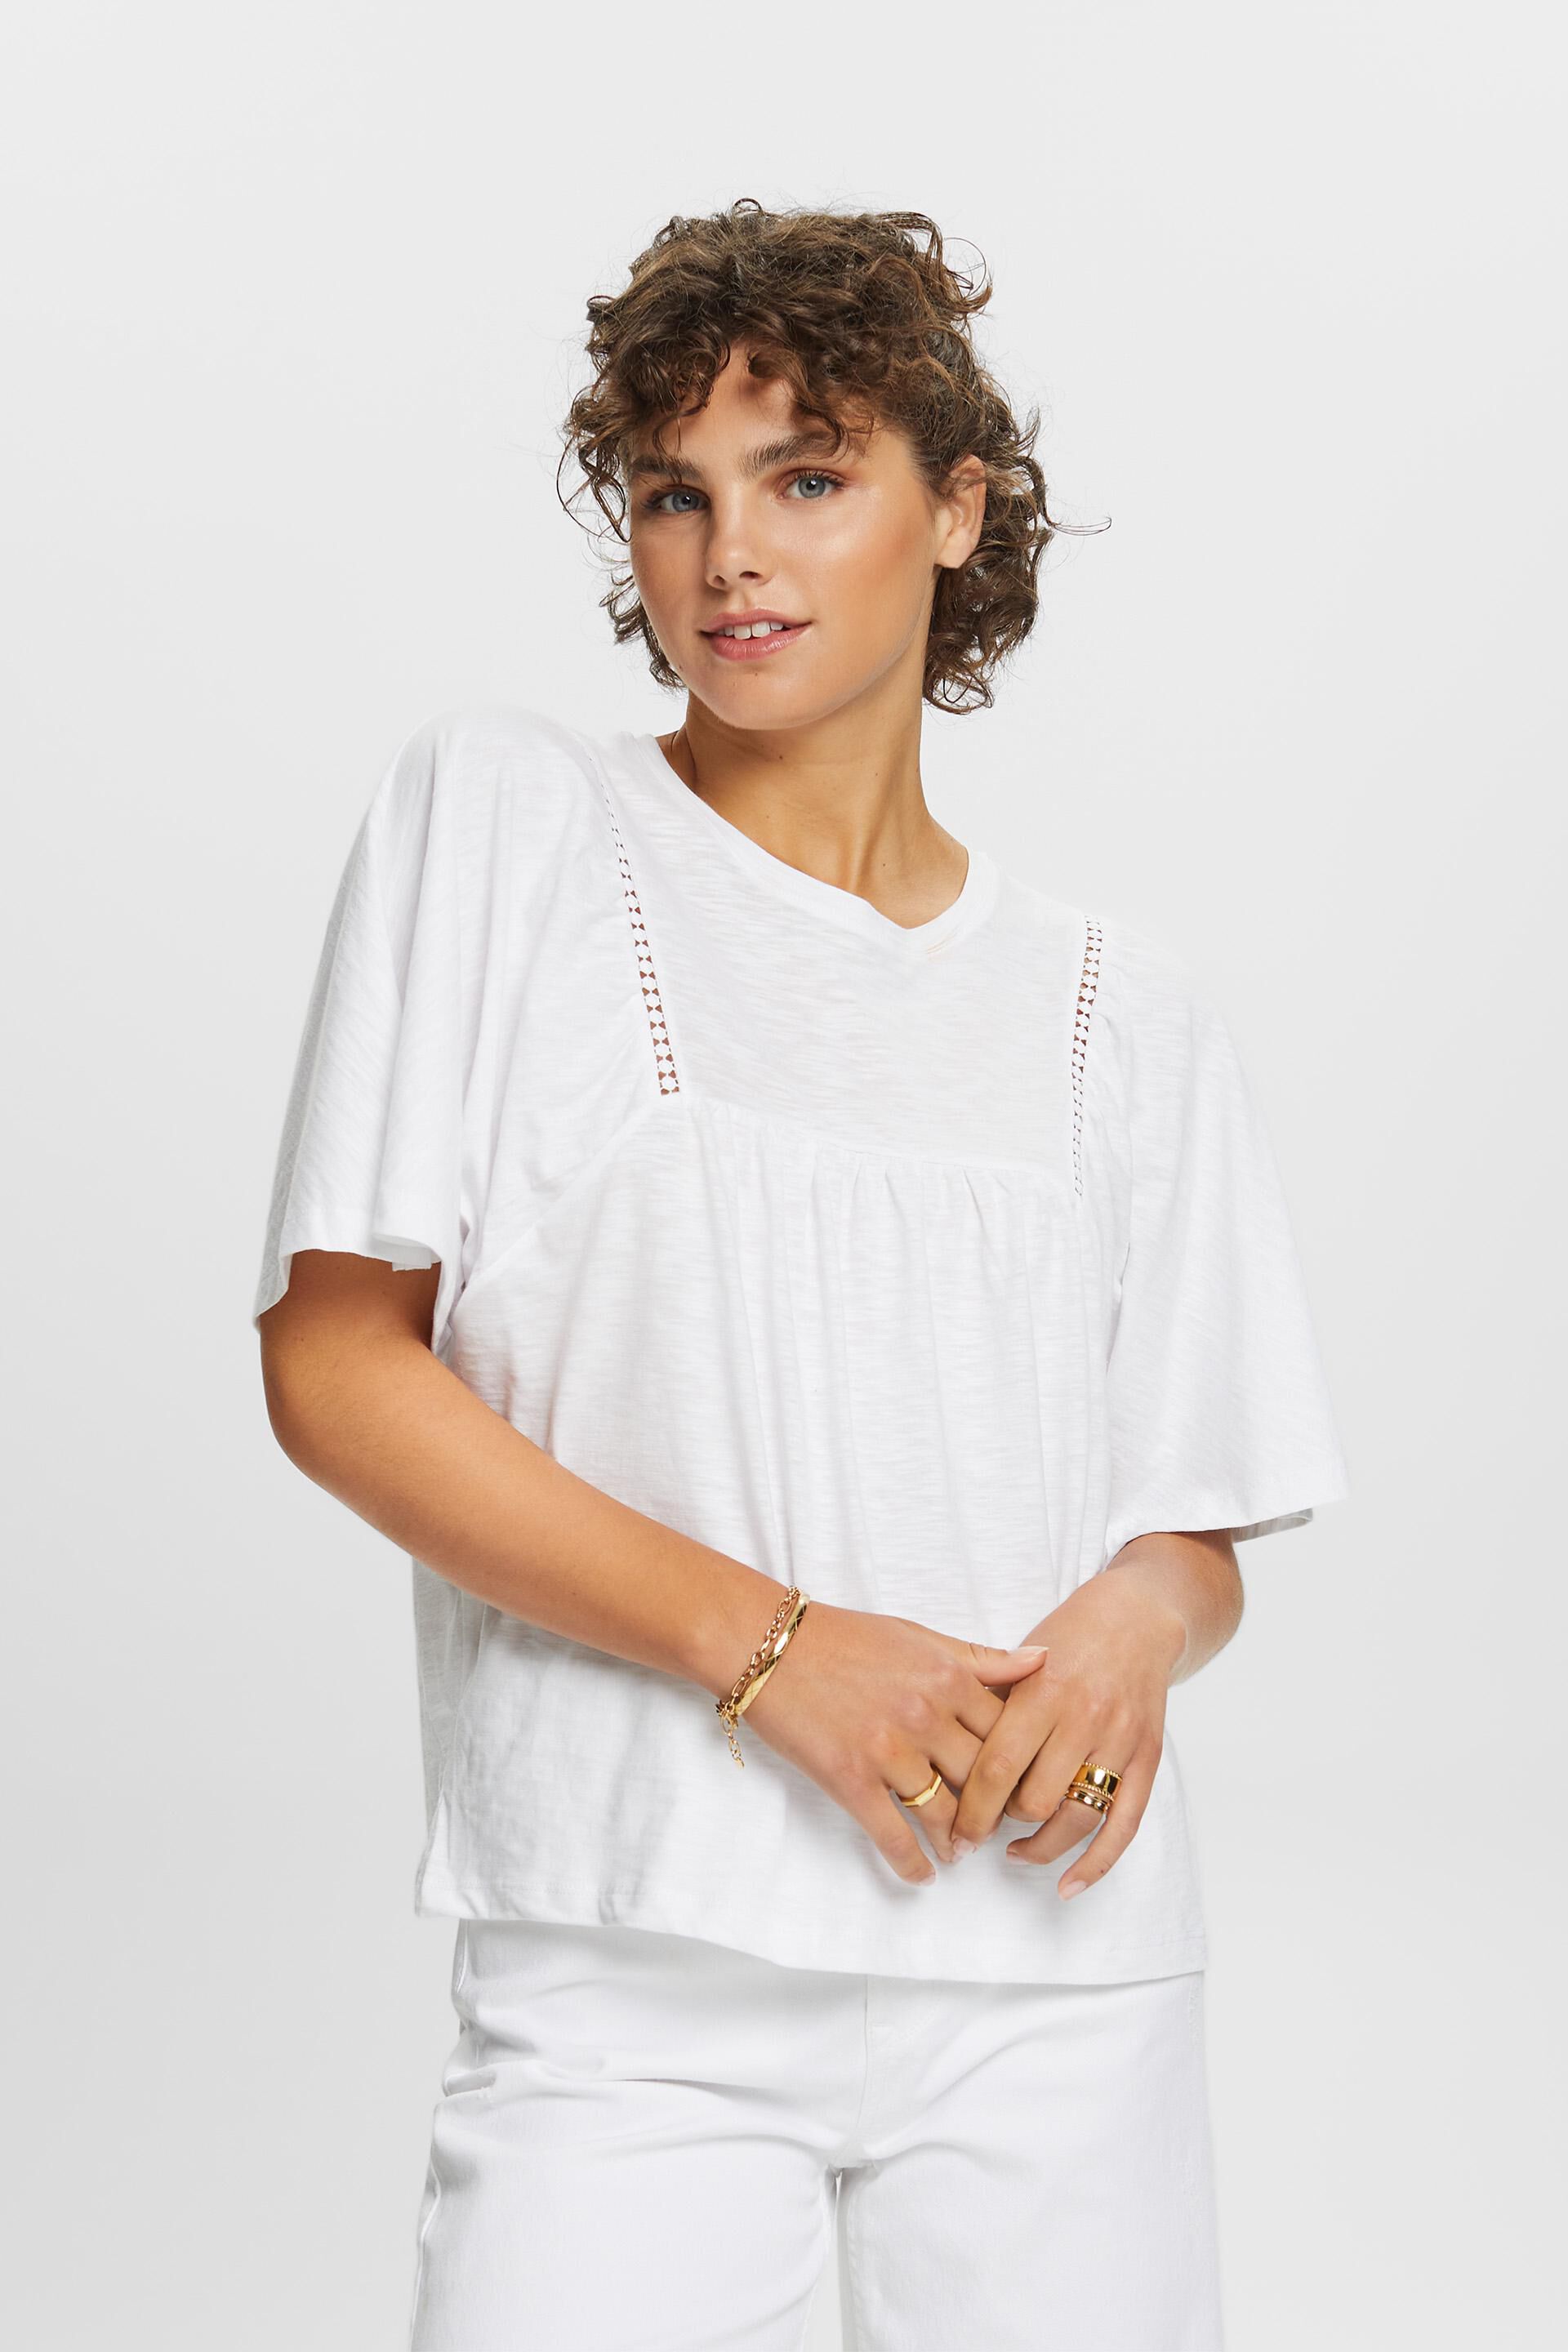 Esprit t-shirt, cotton Flared 100%